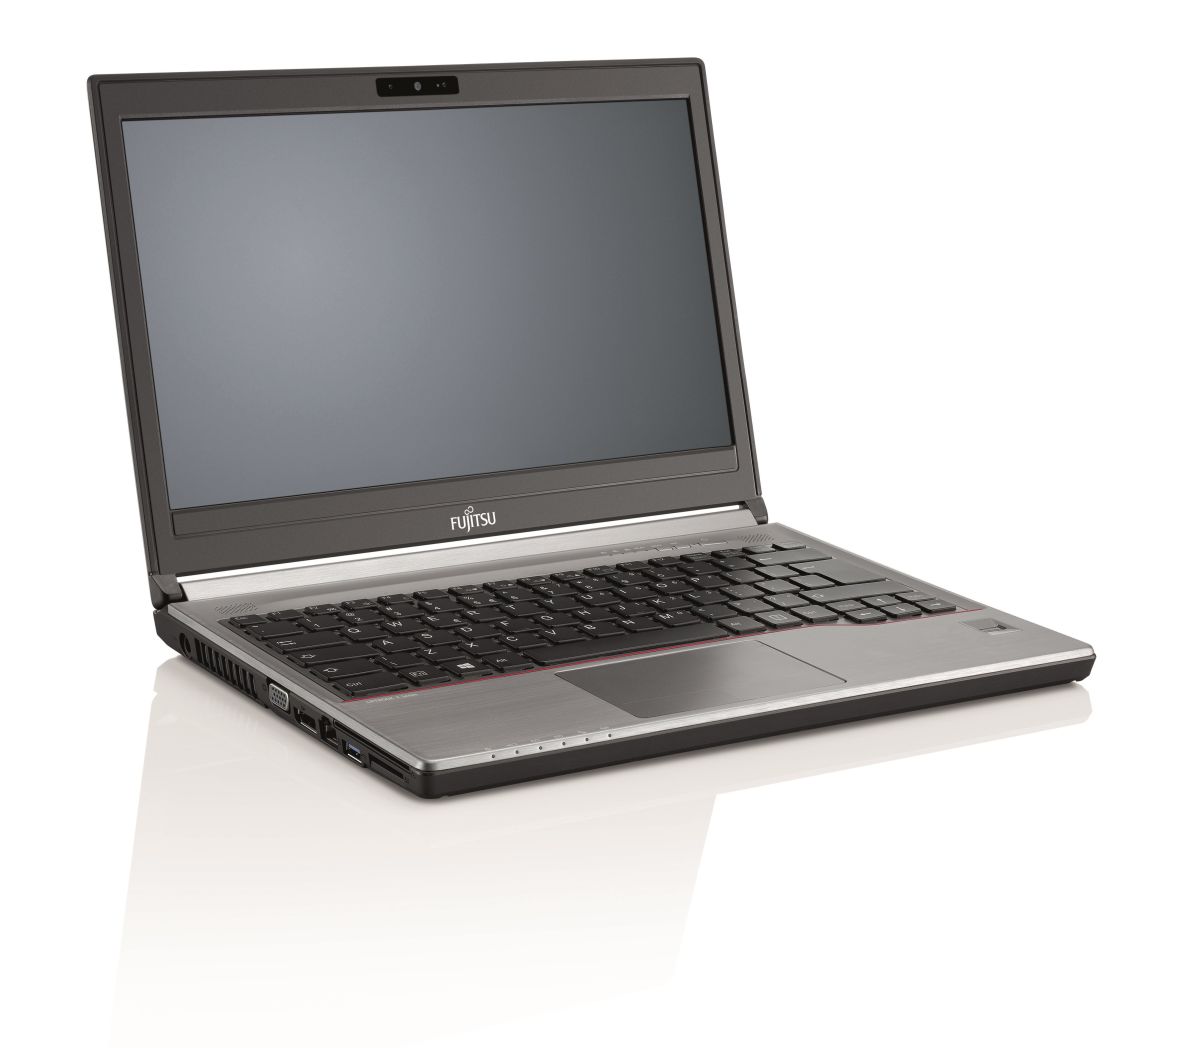 Fujitsu LIFEBOOK E734 - BERAD30000HAABFK laptop specifications